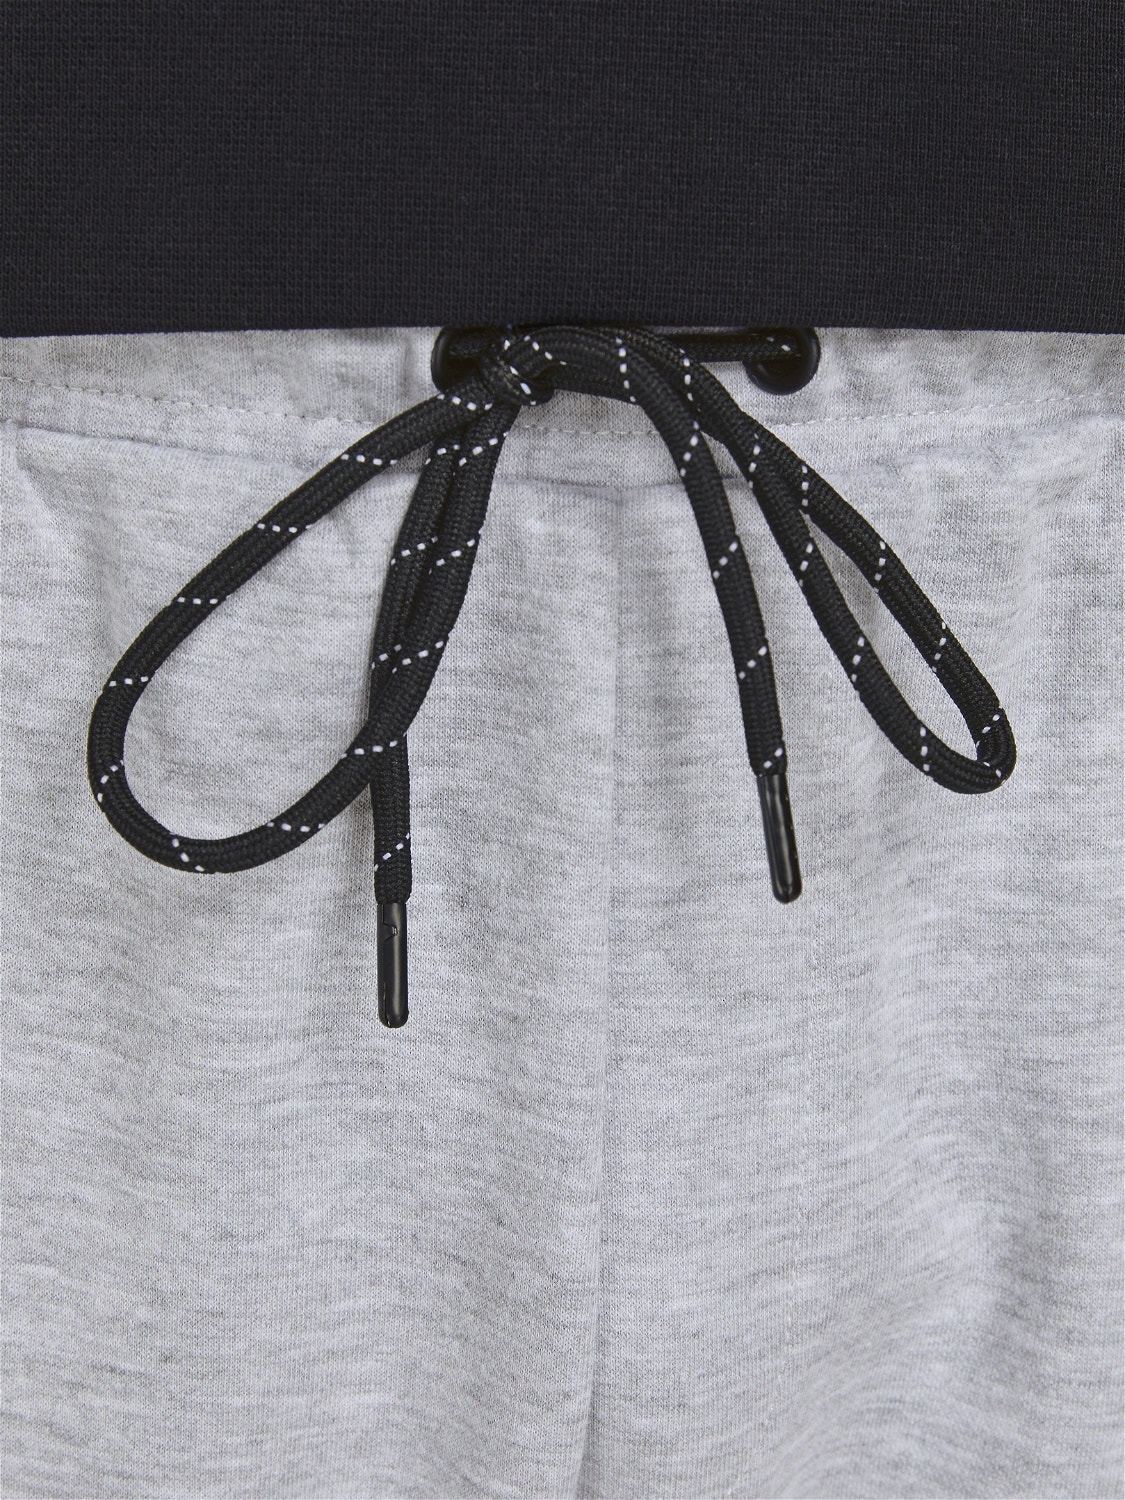 Jack & Jones Slim Fit Spodnie dresowe -Light Grey Melange - 12184970